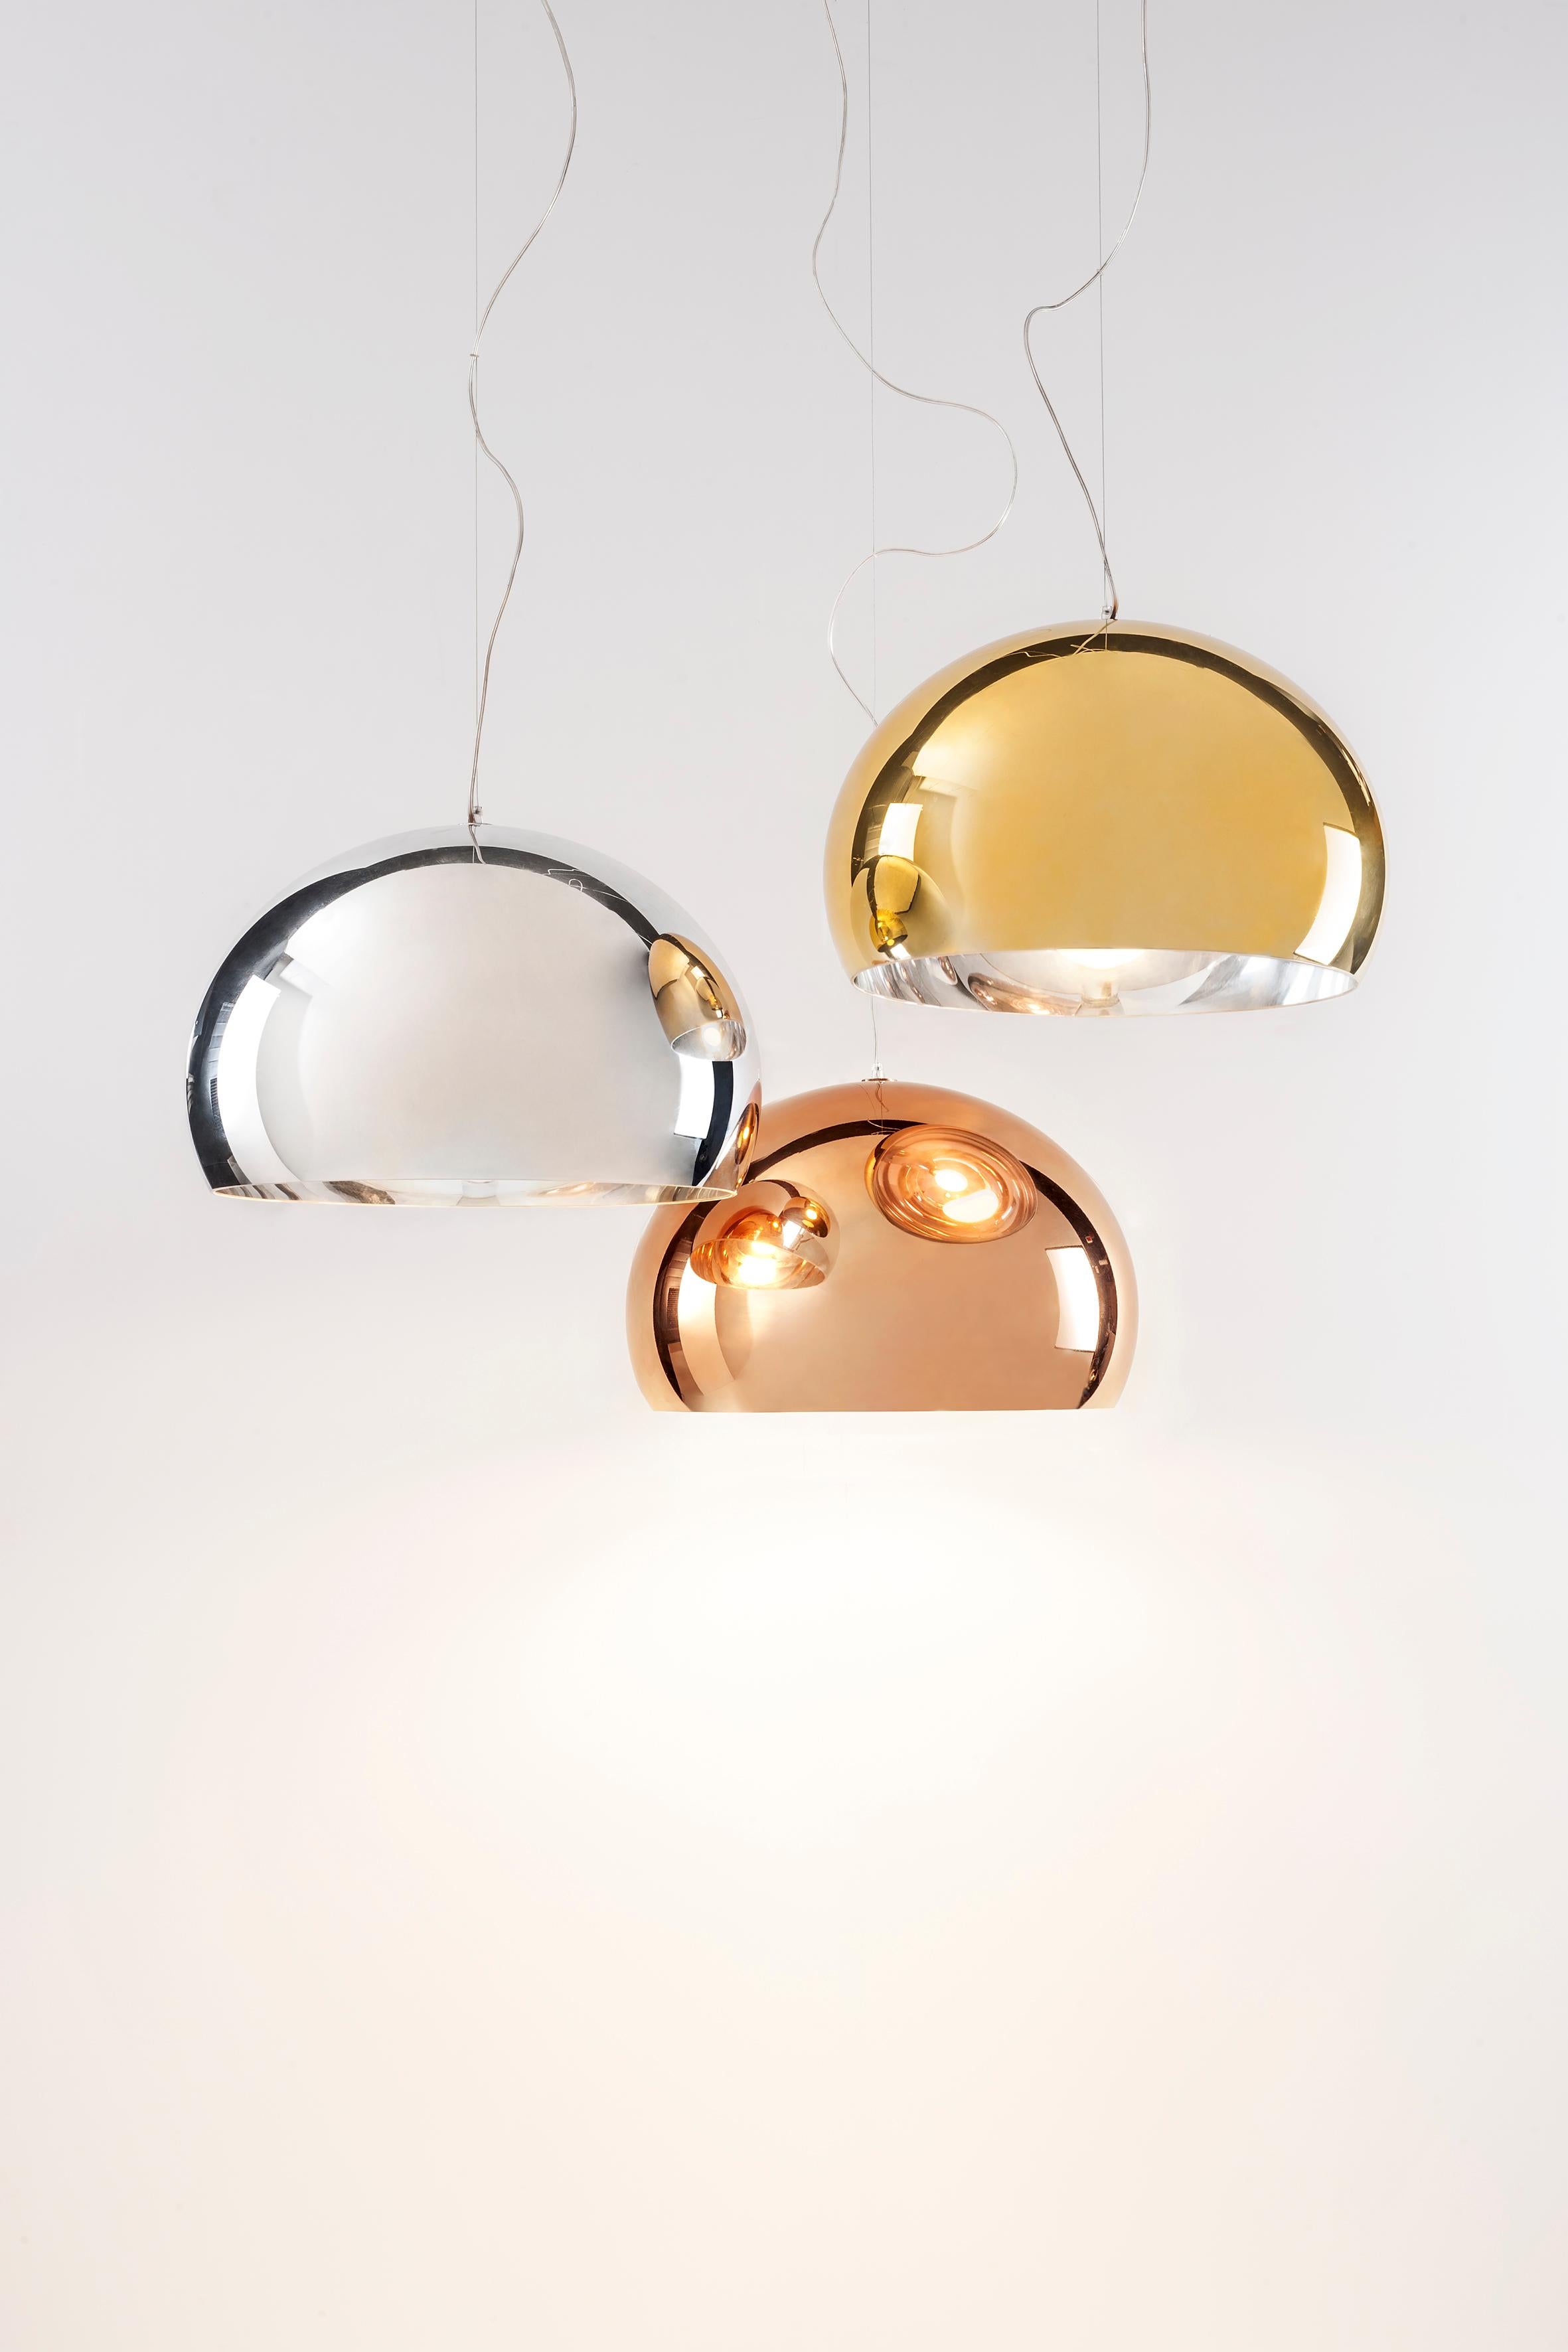 Kartell Medium FL/Y Pendant Light in Copper by Ferruccio Laviani In New Condition For Sale In Brooklyn, NY